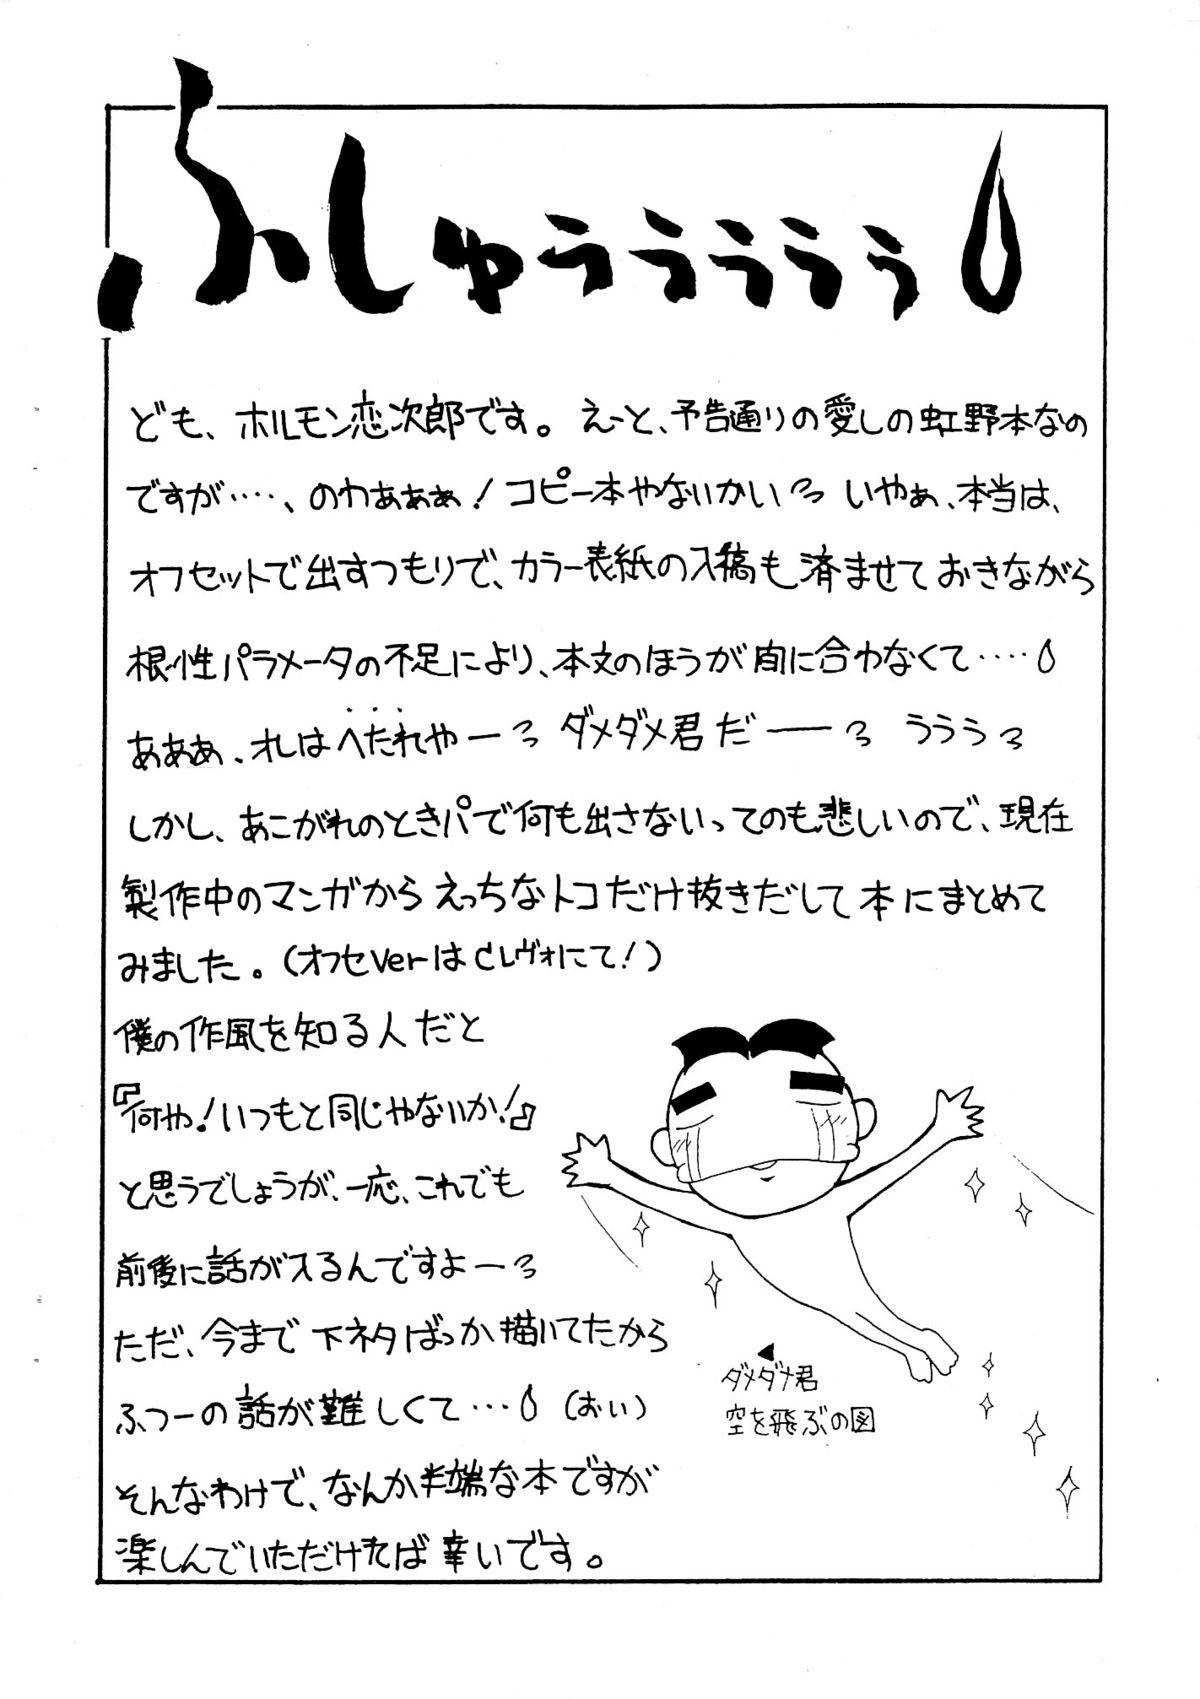 Lovers PLEASE EAT ME - Tokimeki memorial Lesbians - Page 2